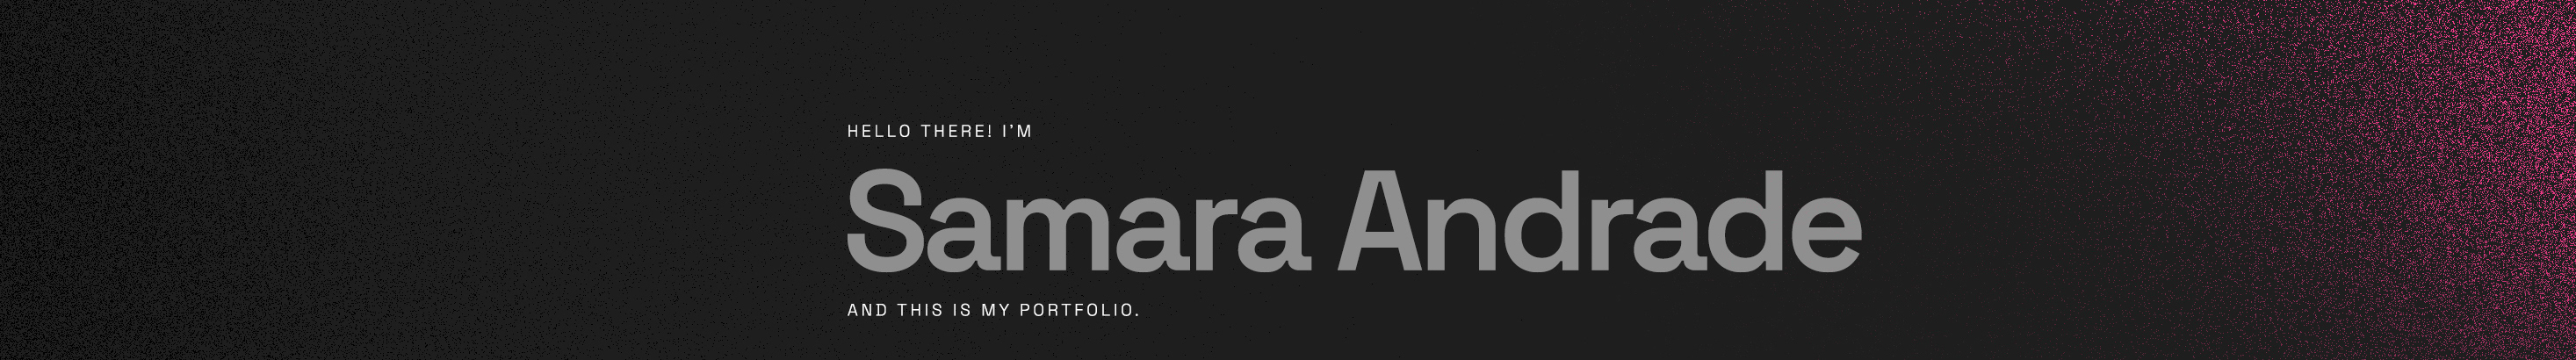 Samara Andrade's profile banner